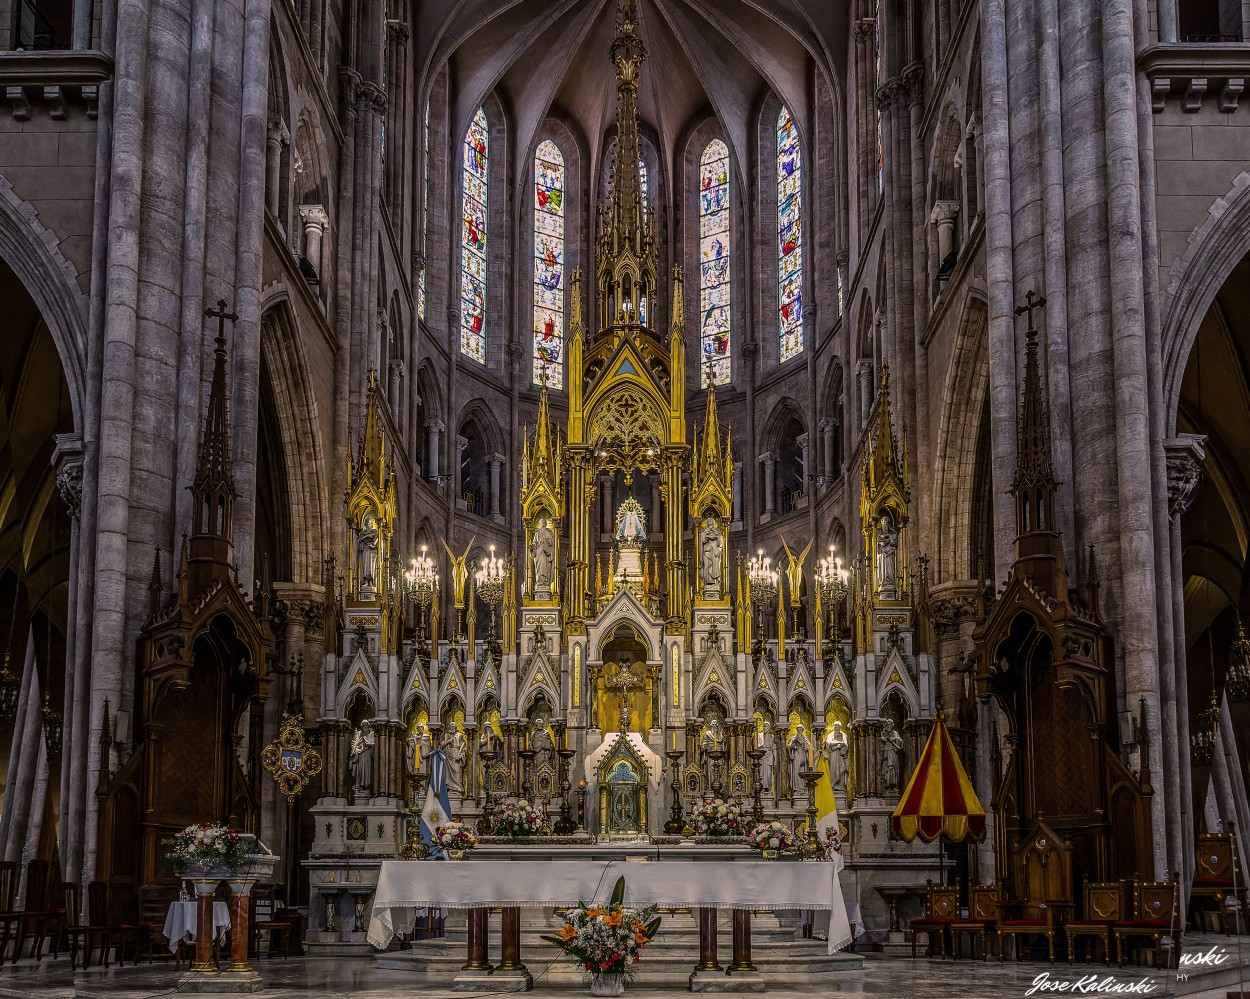 "Altar de la Basilica de Lujan" de Jose Carlos Kalinski